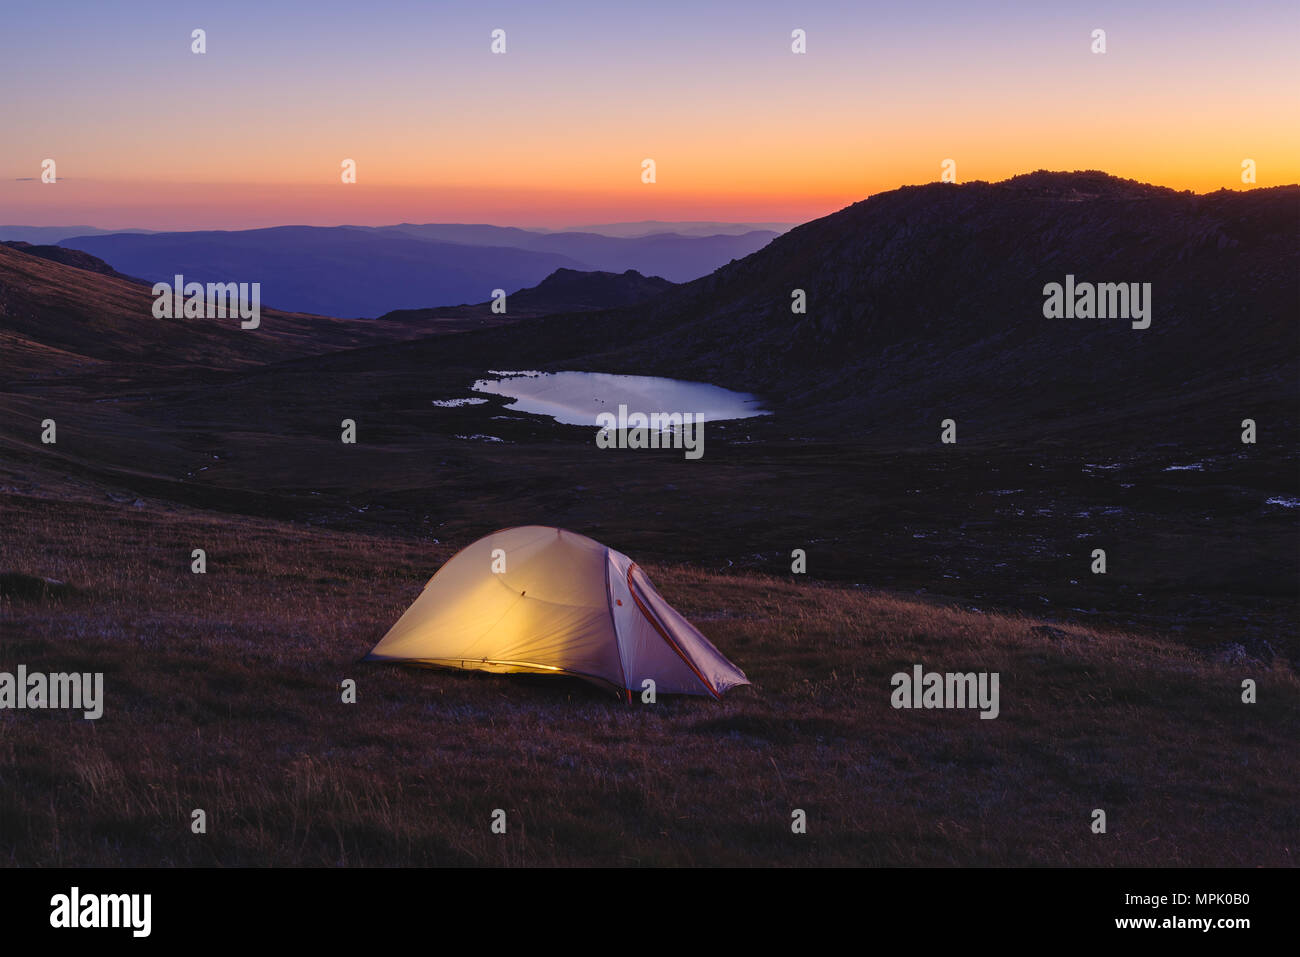 Camping in the mountains. Mount Kosciuszko Stock Photo